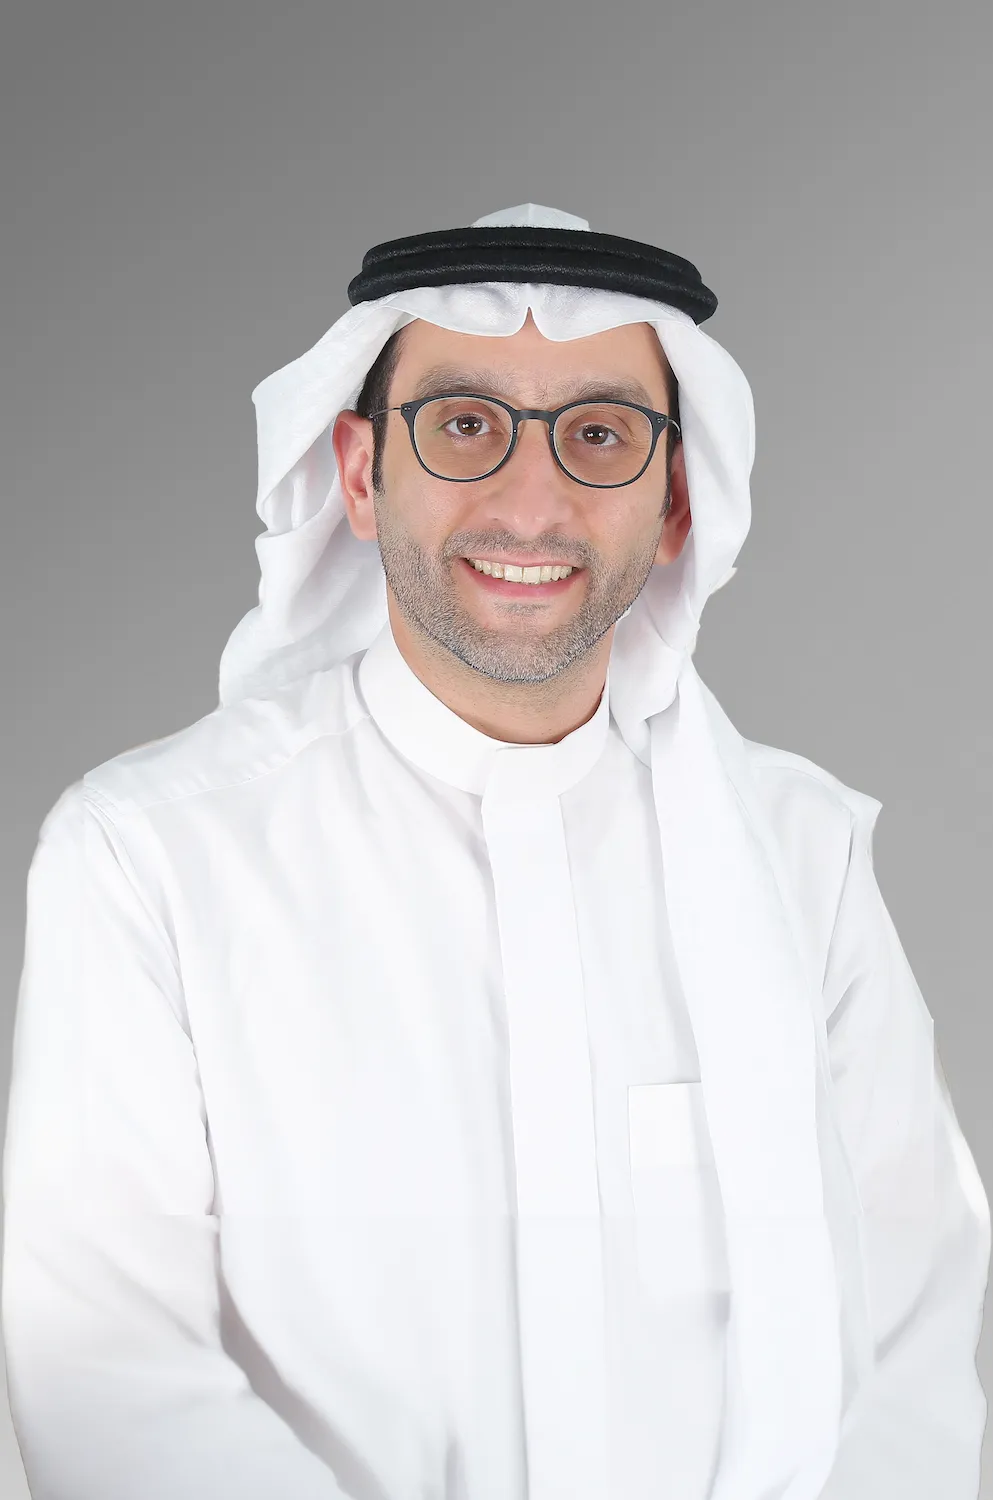 Abdullrahman Al Zamil